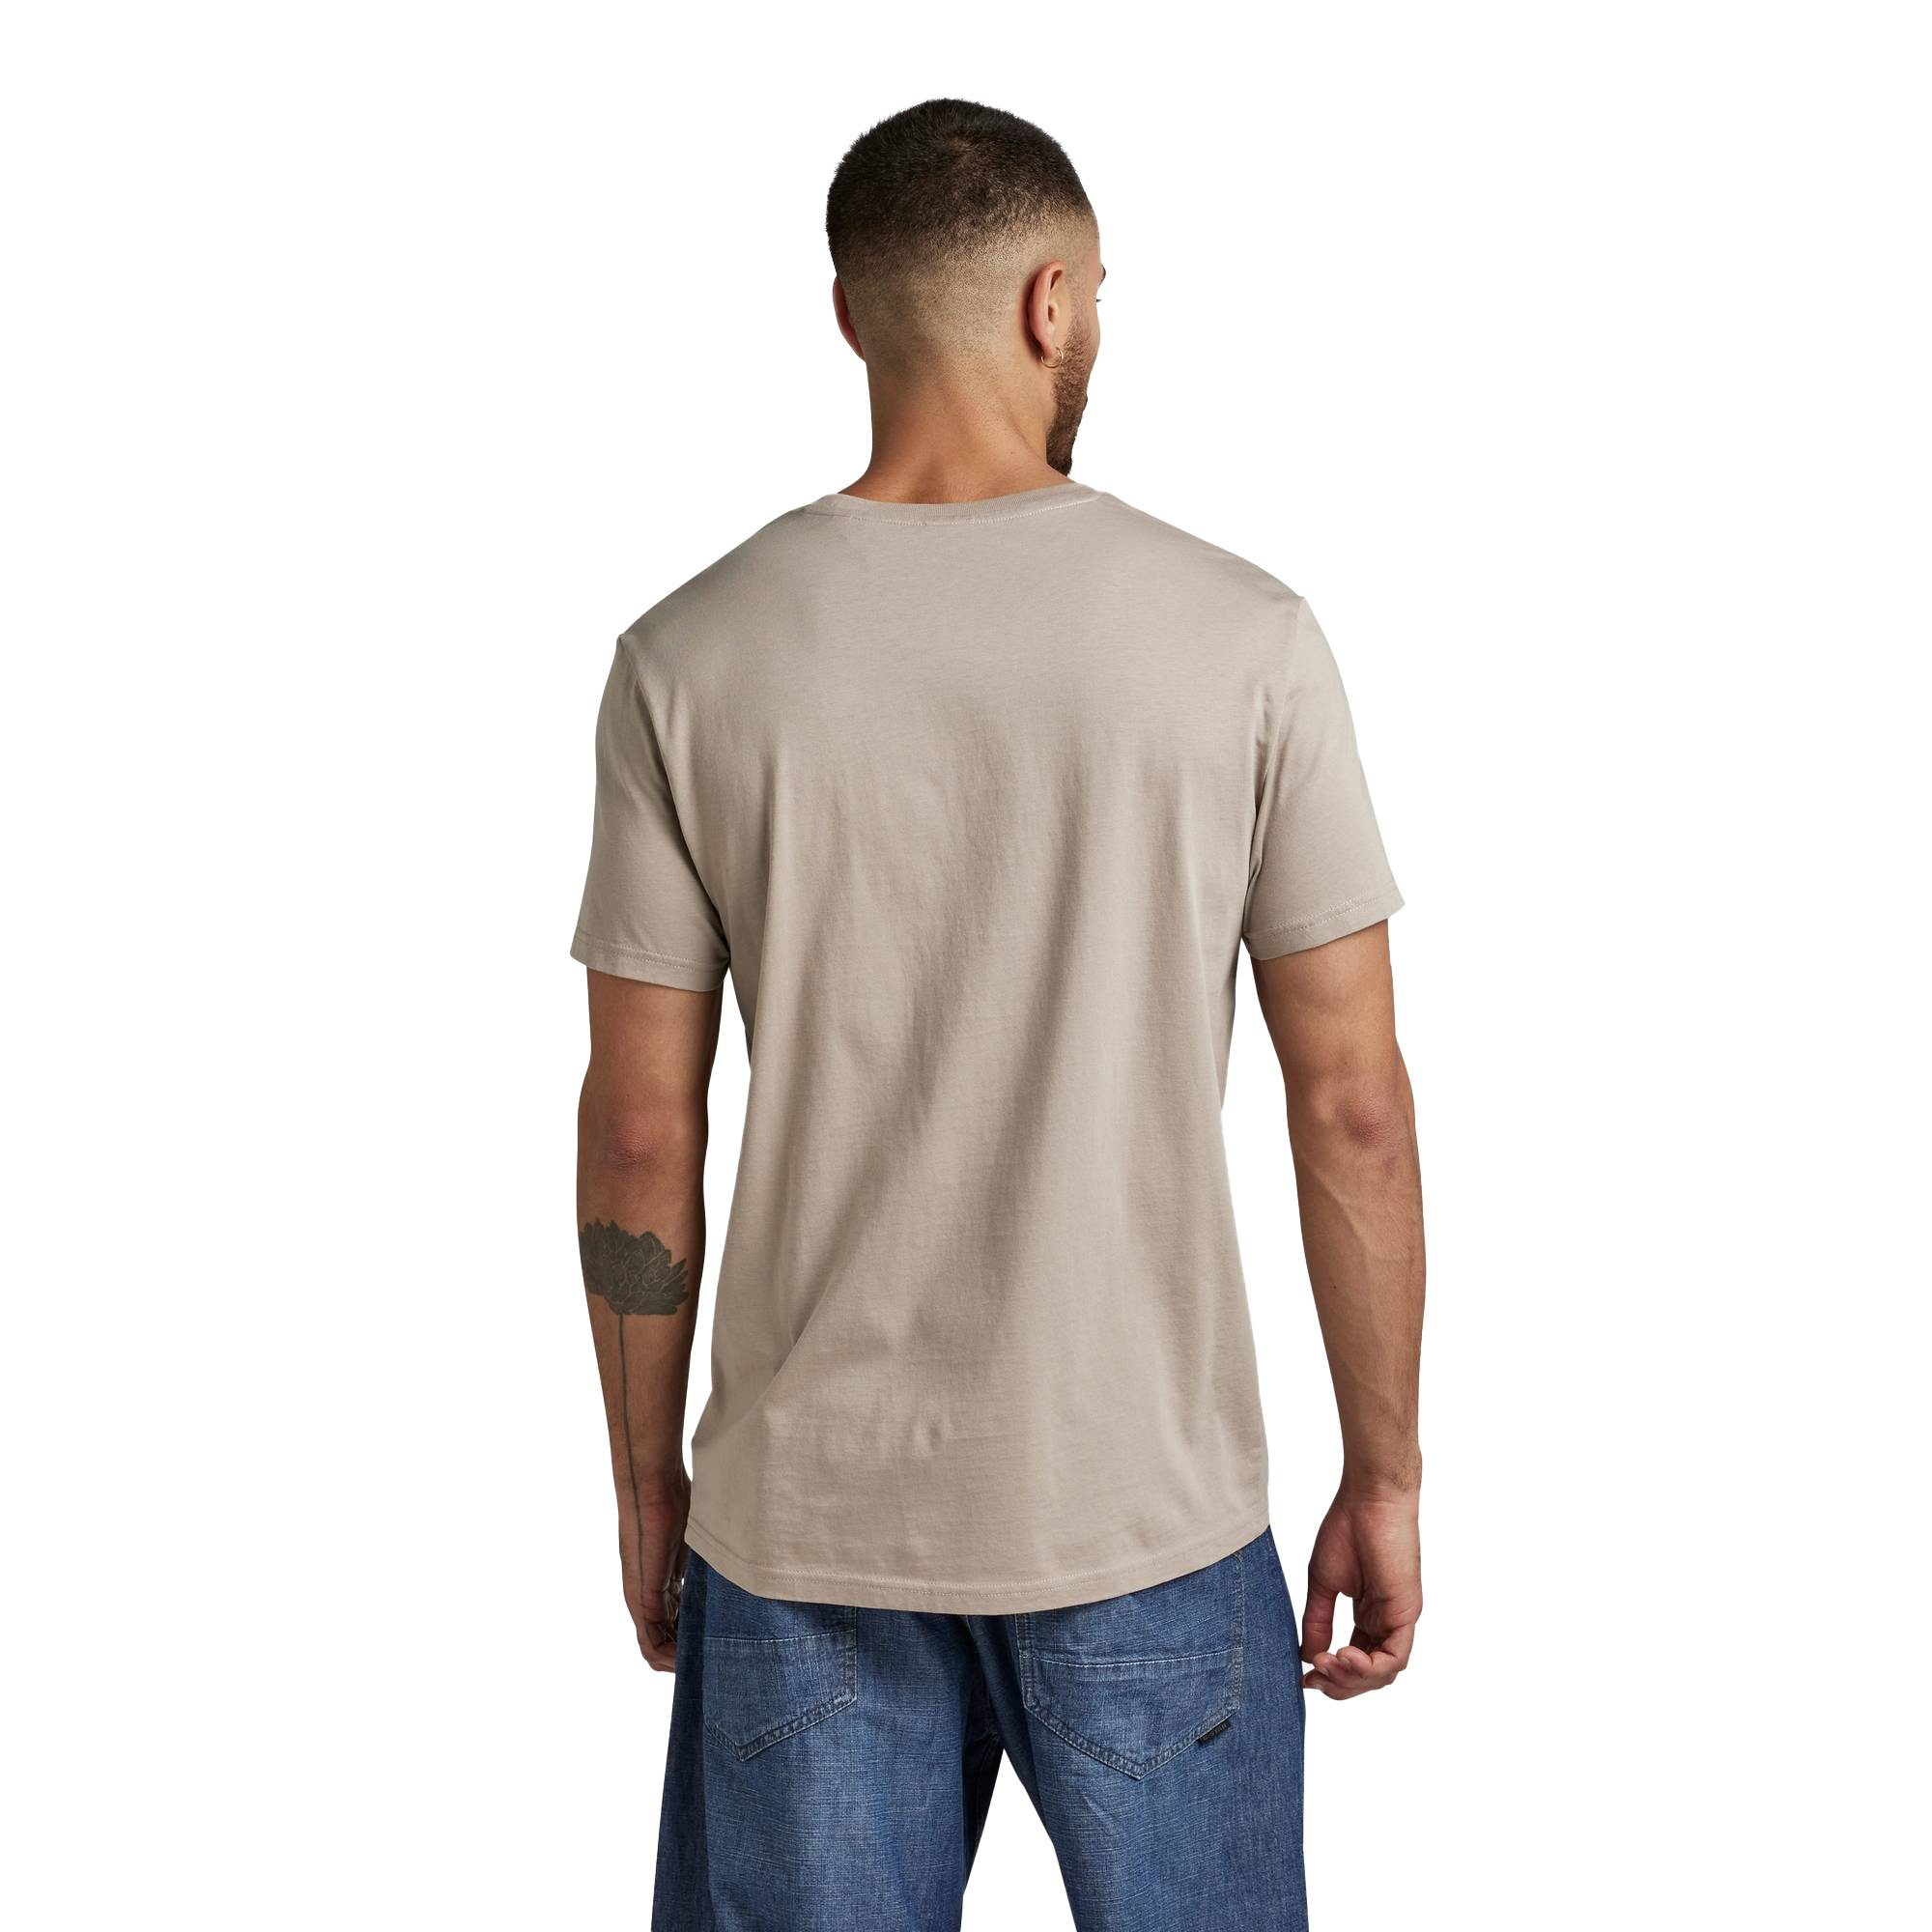 G-Star RAW T-Shirt Herren Rundhals Grau/Braun Pack Graphic, T-Shirt, - 2er